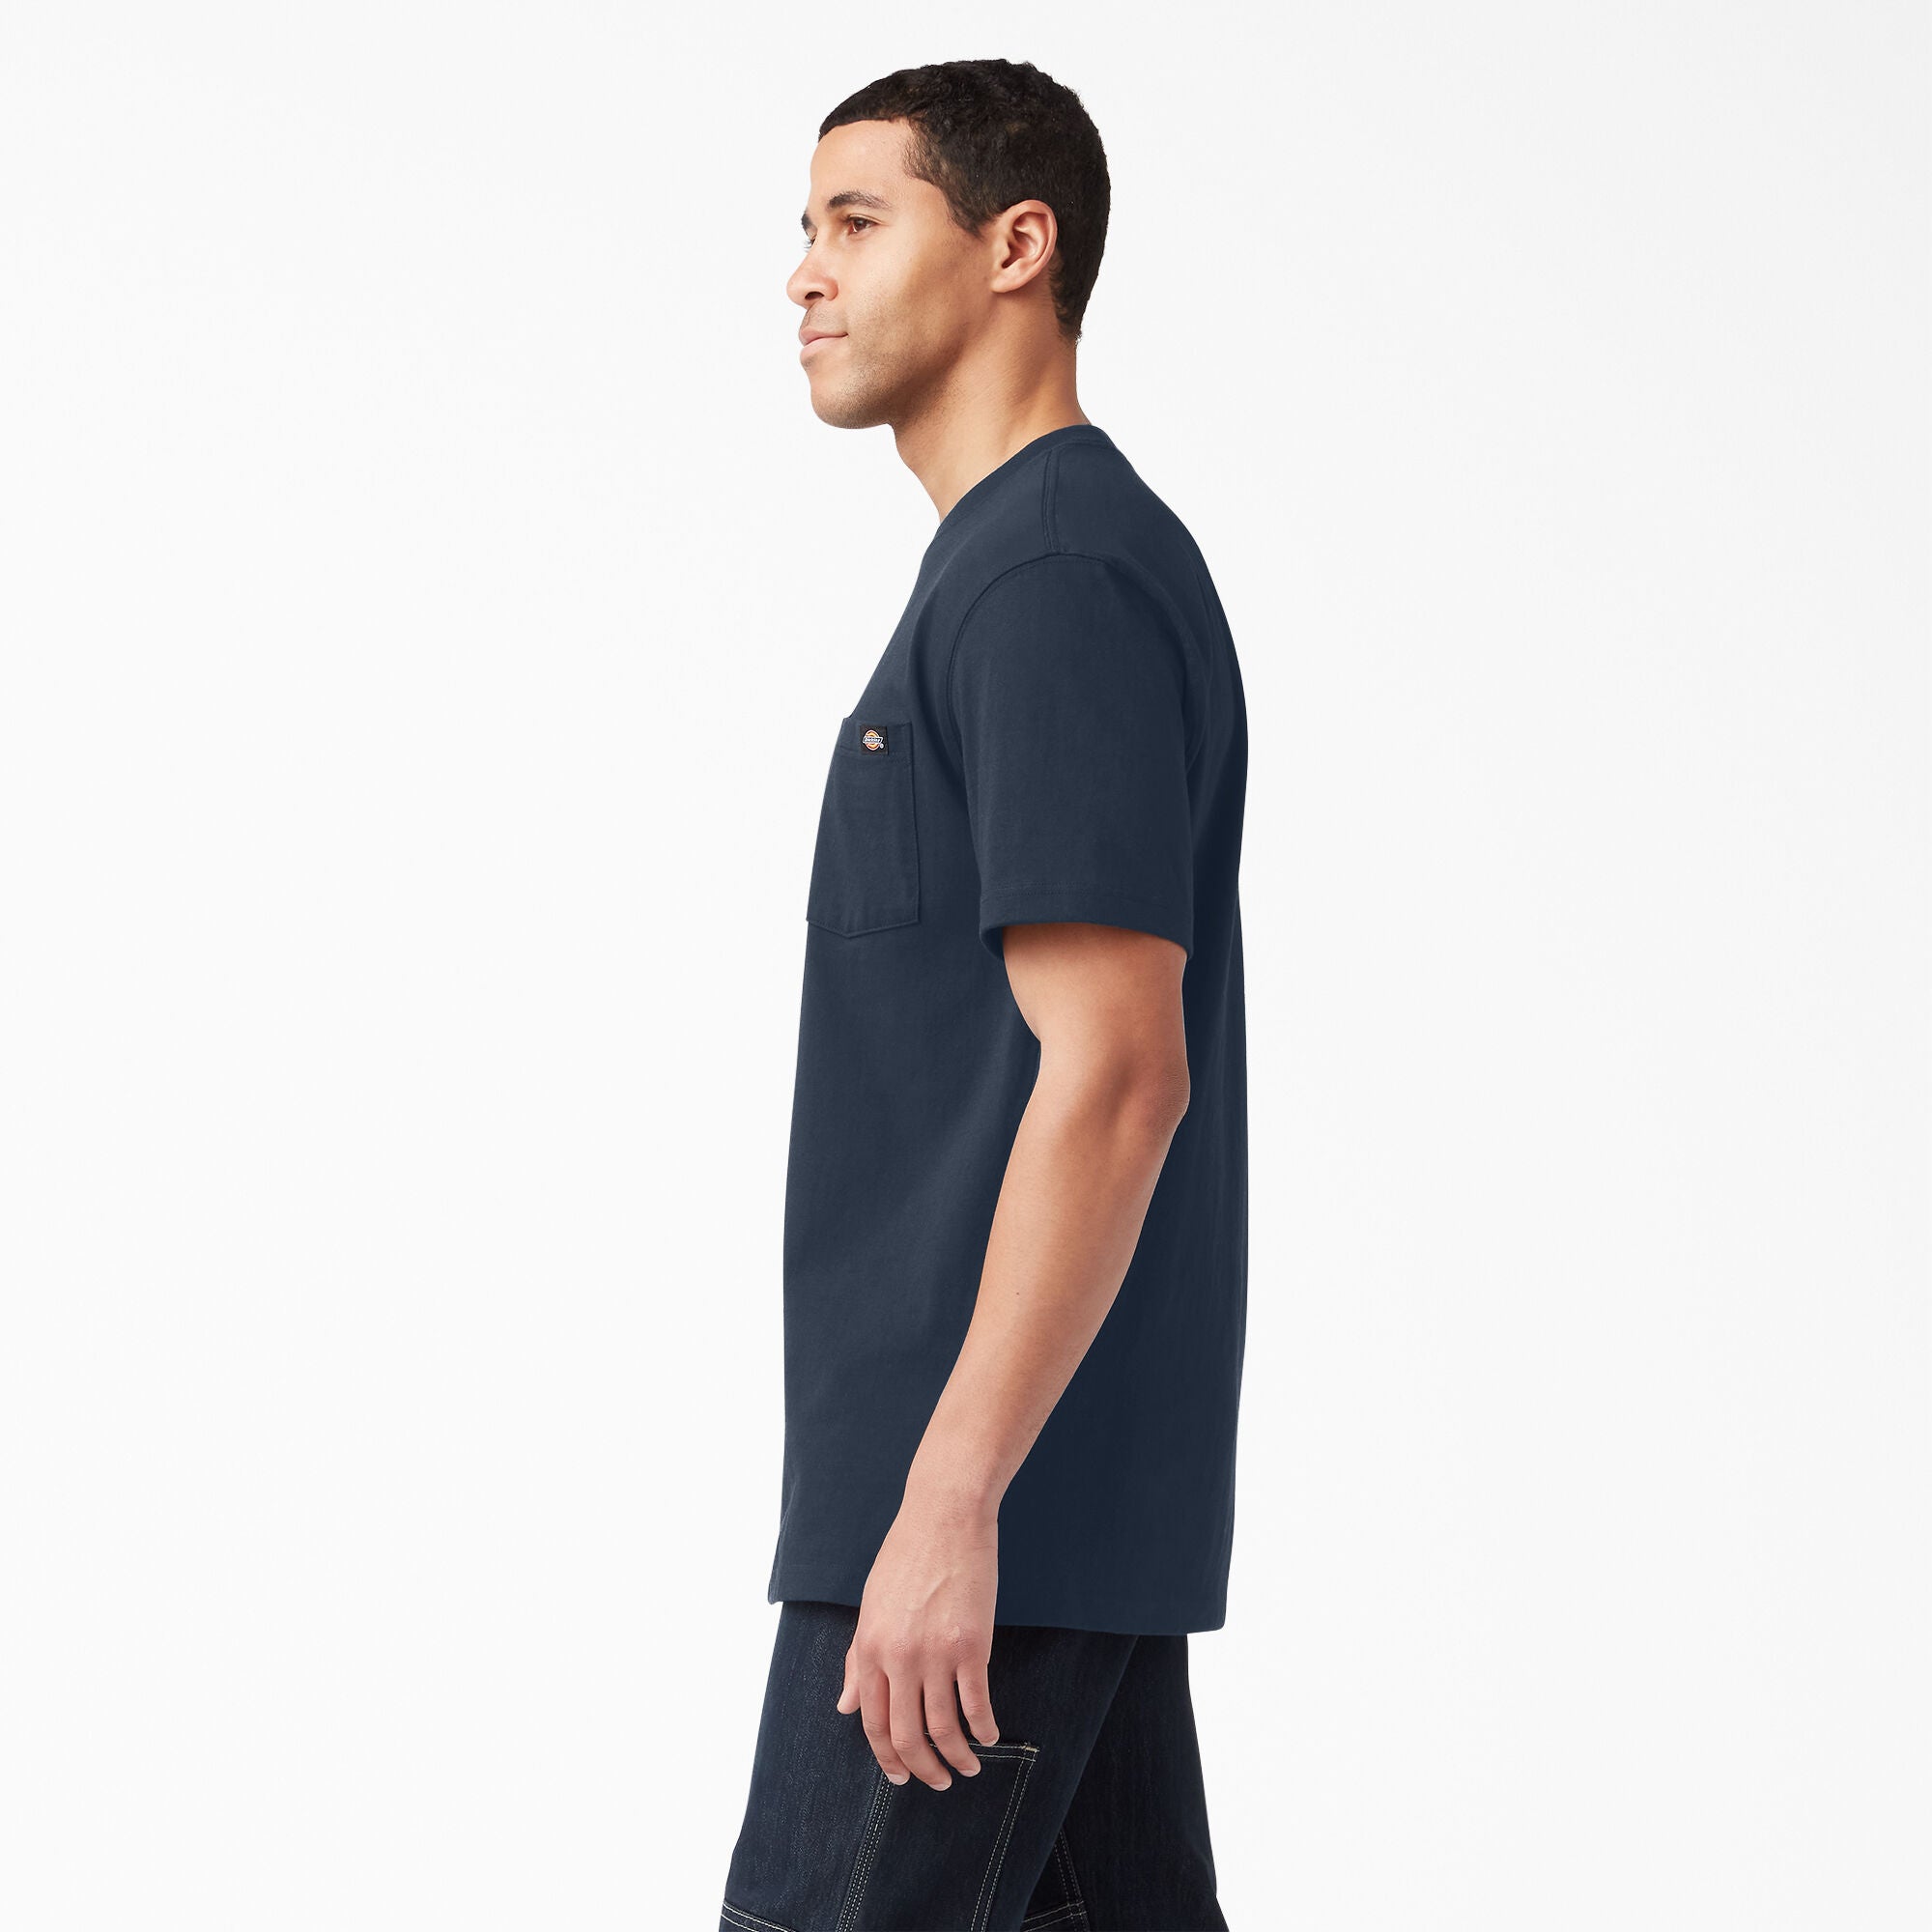 Dickies S/S Pocket T-Shirt - Navy